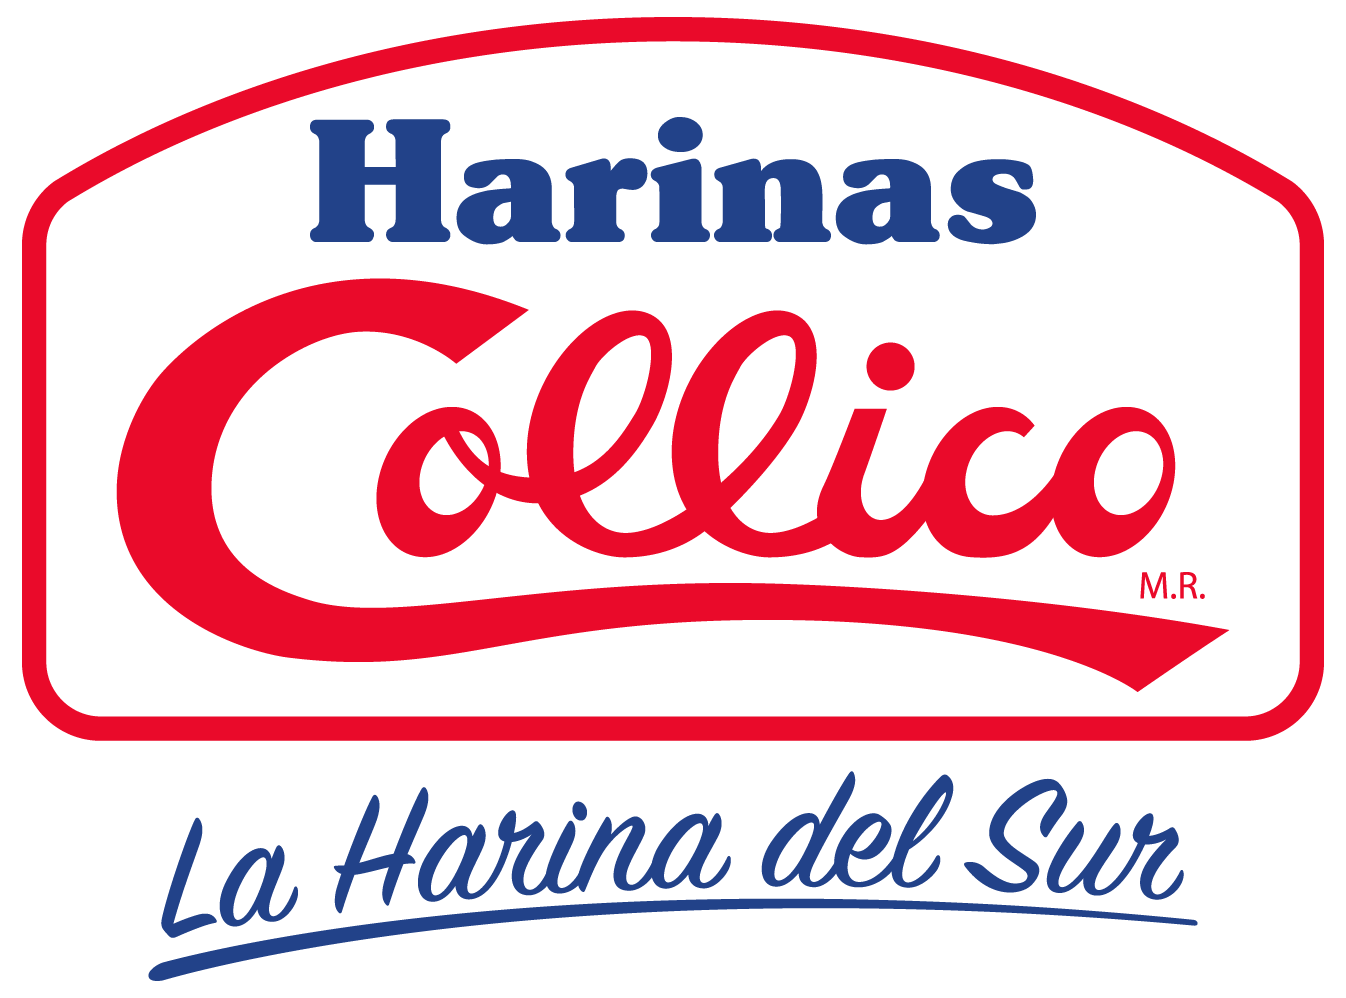 Harinas Collico